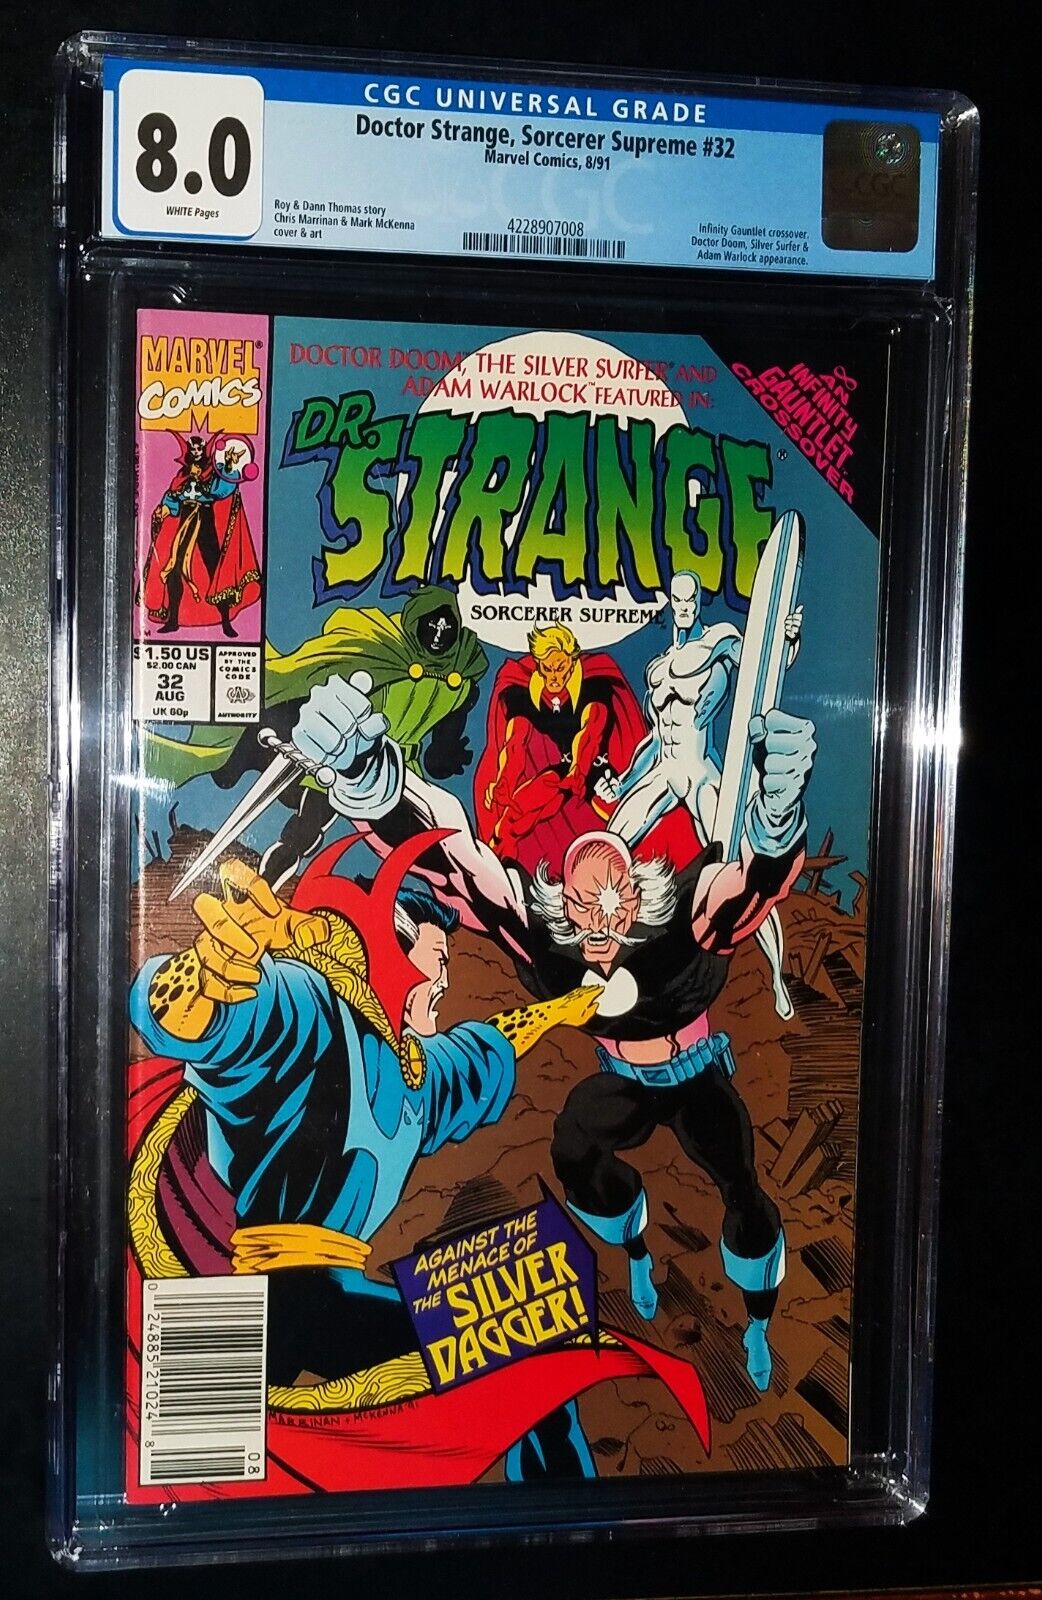 CGC DOCTOR STRANGE, SORCERER SUPREME #32 1991 Marvel Comics CGC 8.0 Very Fine